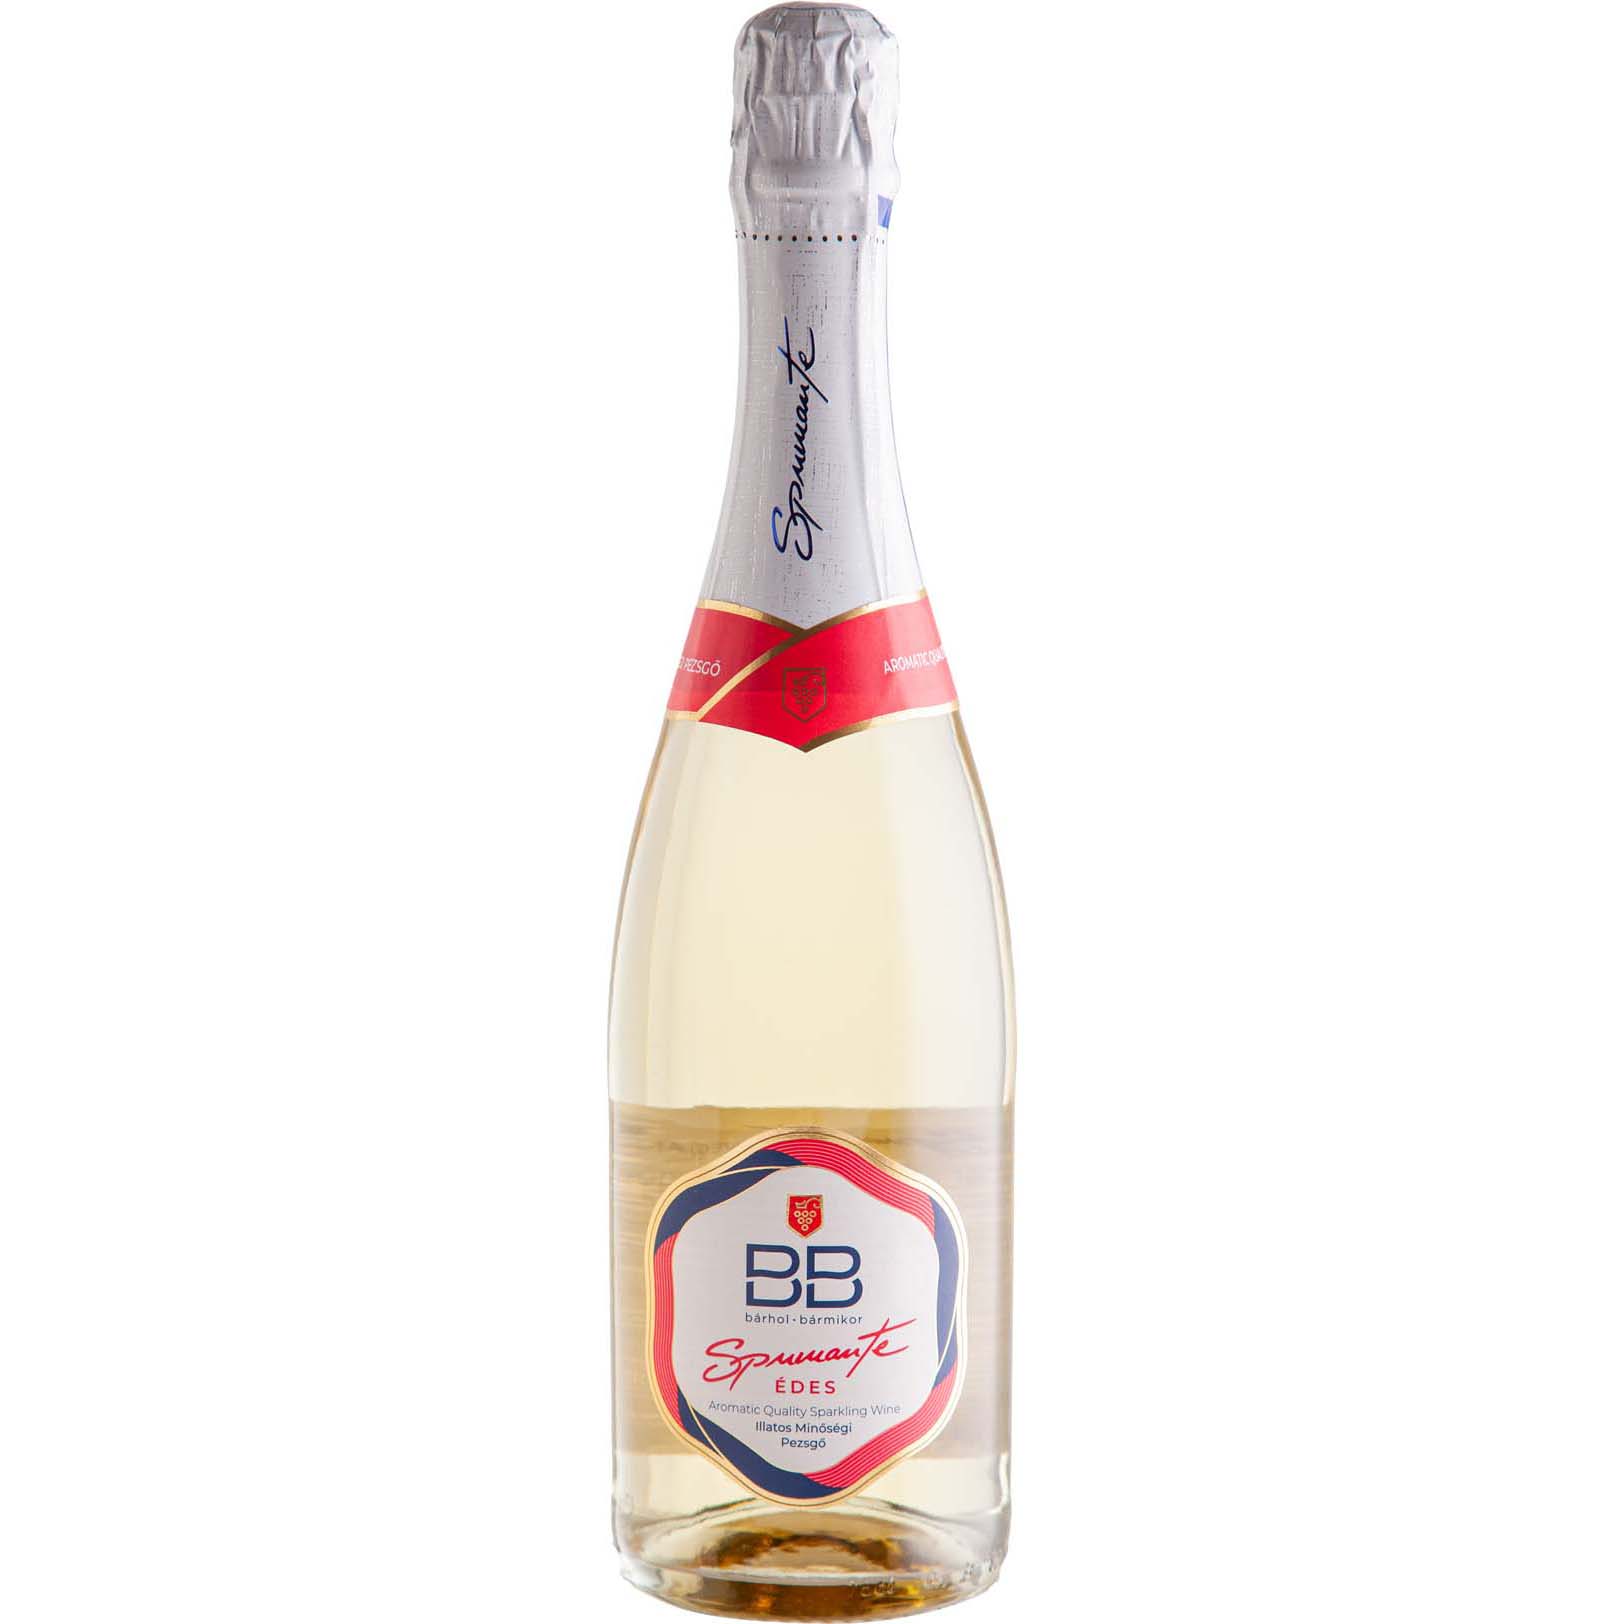 Bb Spumante Aromatic Quality Sparkling Wine